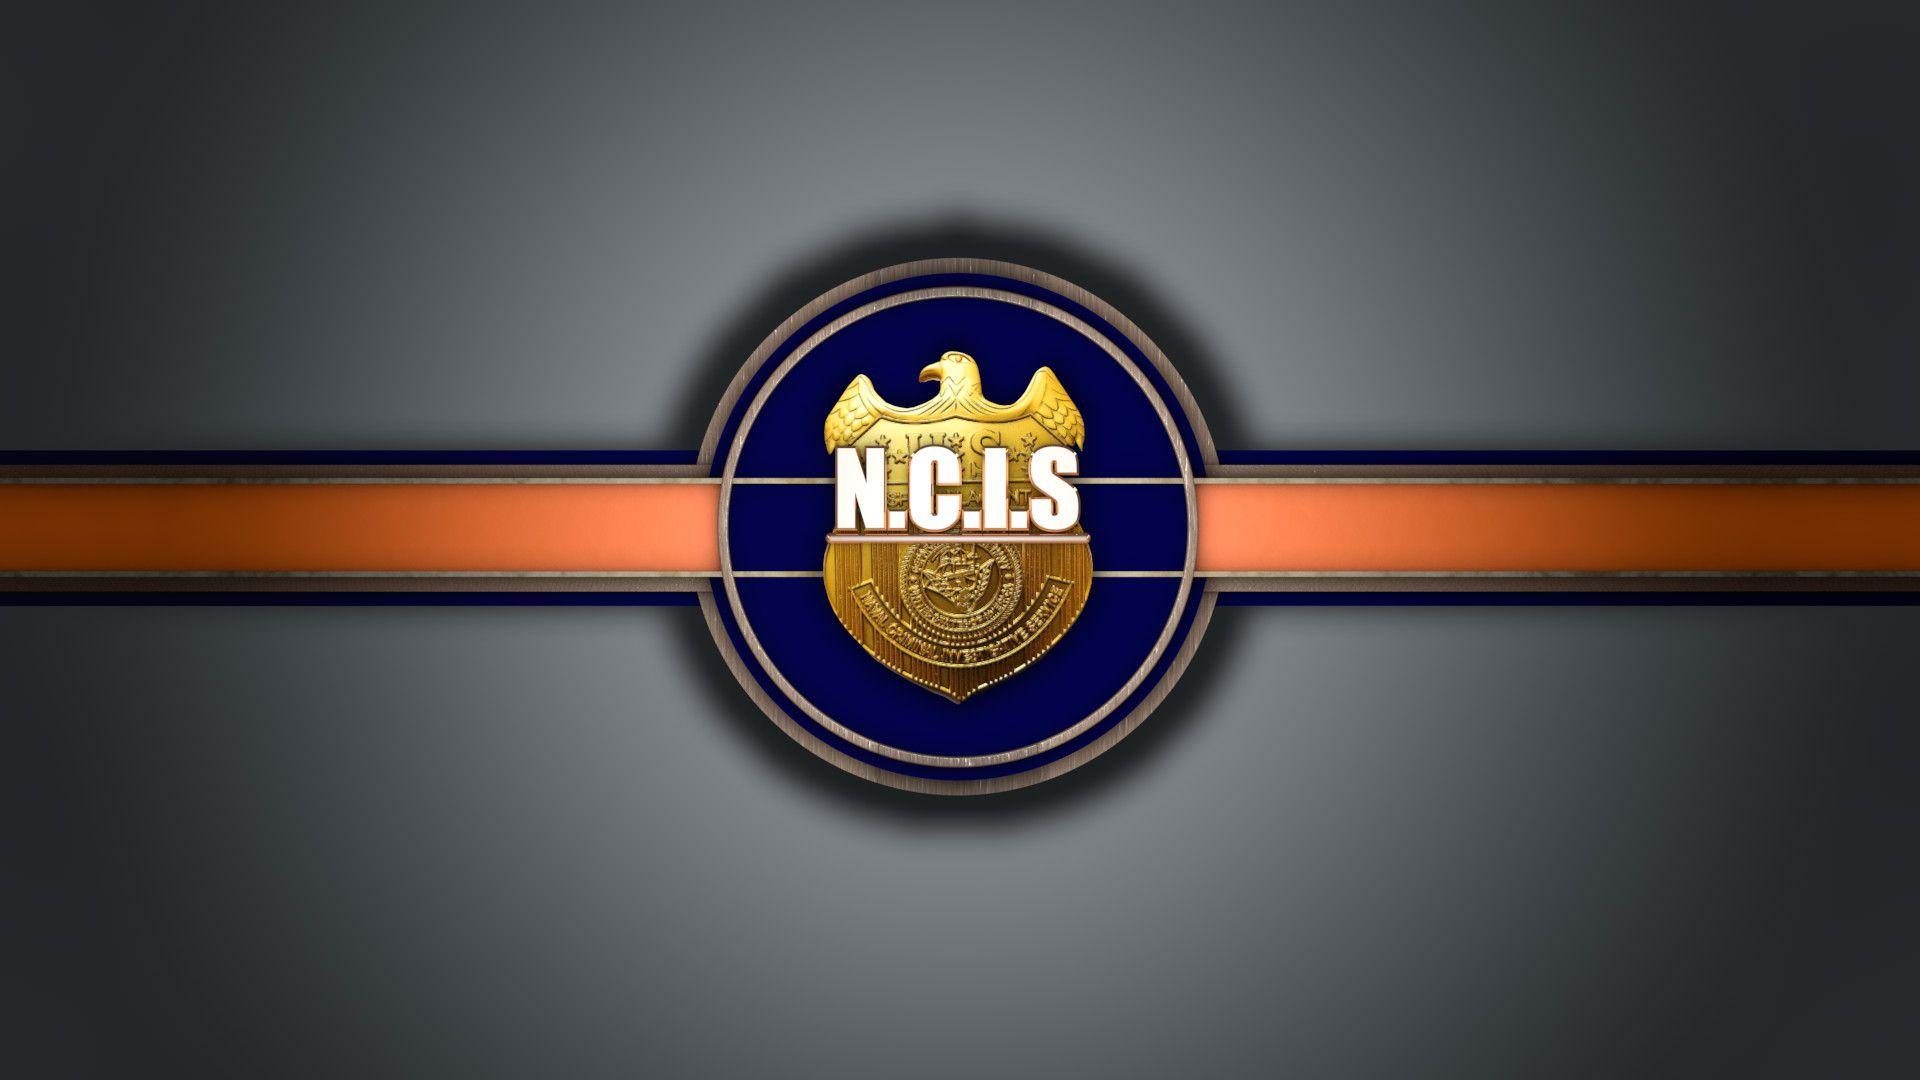 Ncis Logo Wallpapers Top Free Ncis Logo Backgrounds